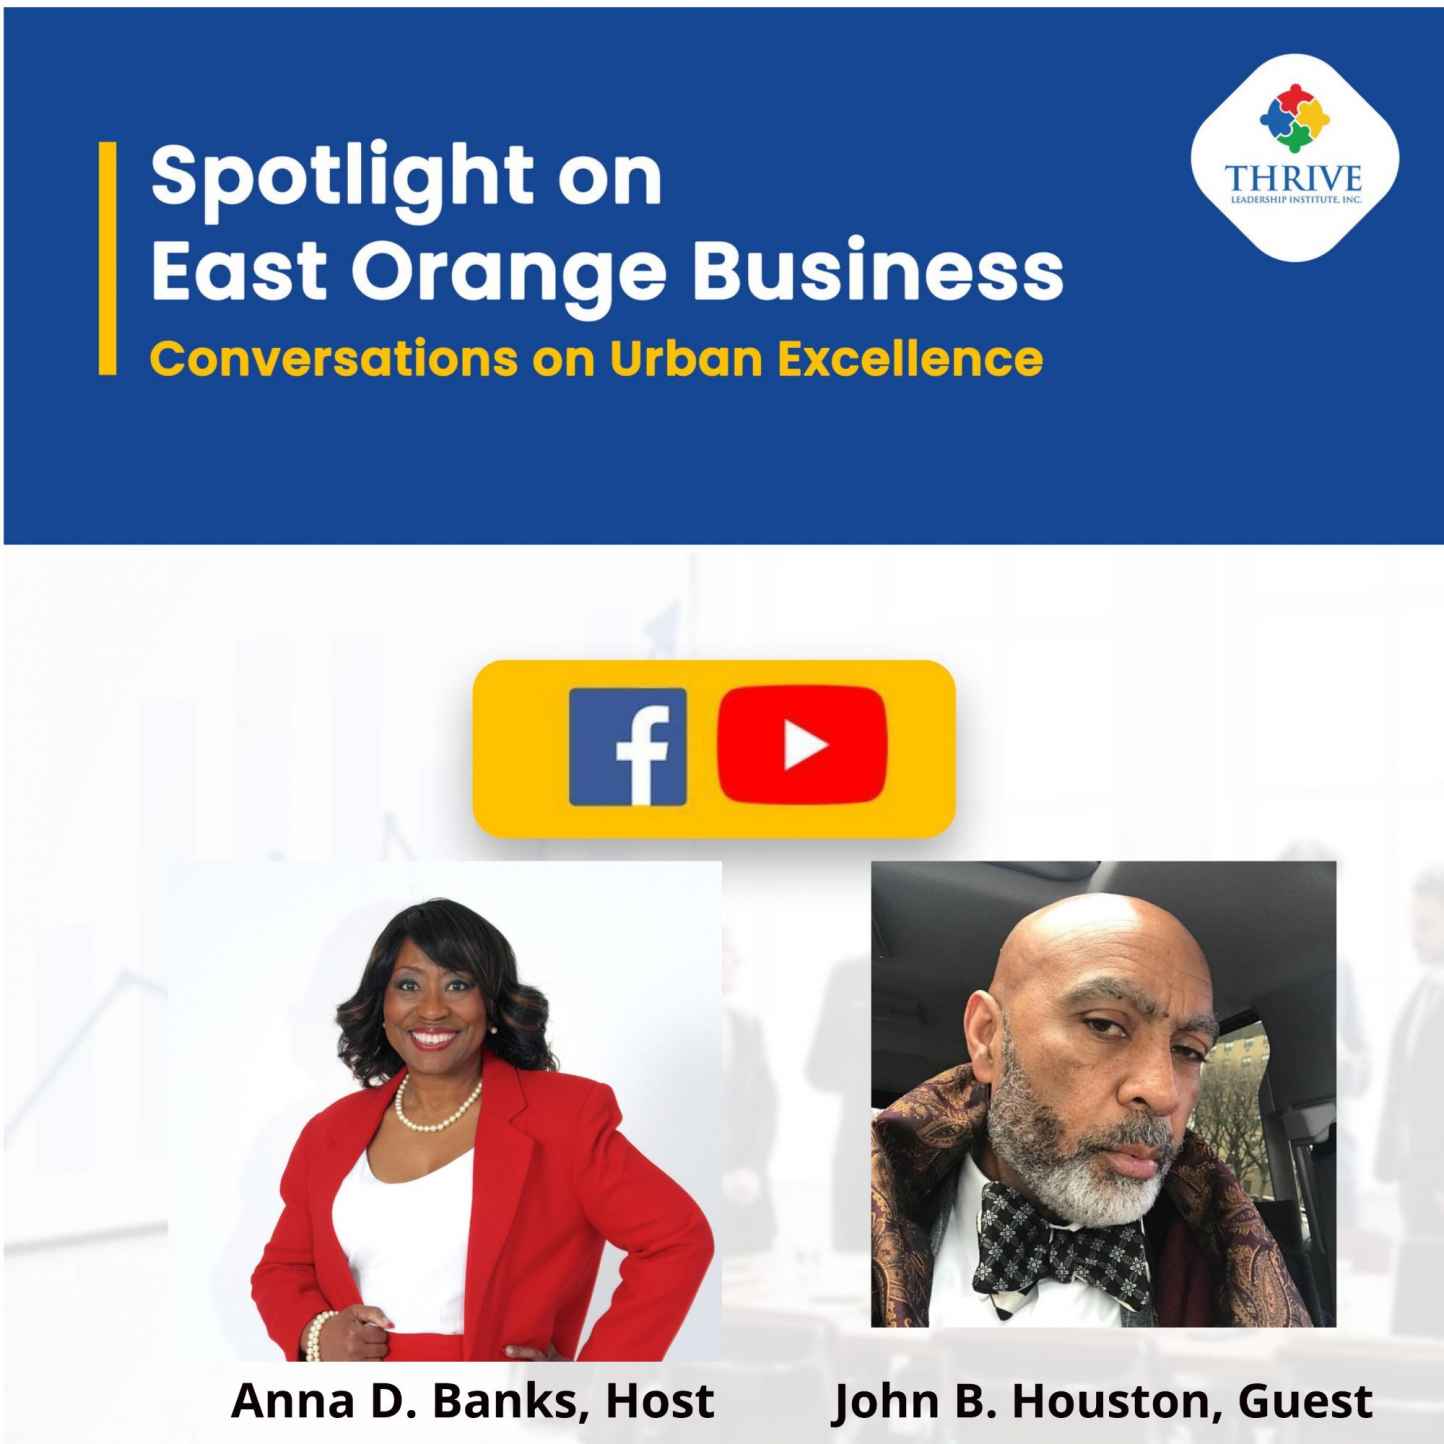 John Houston on Spotlight on East Orange Business